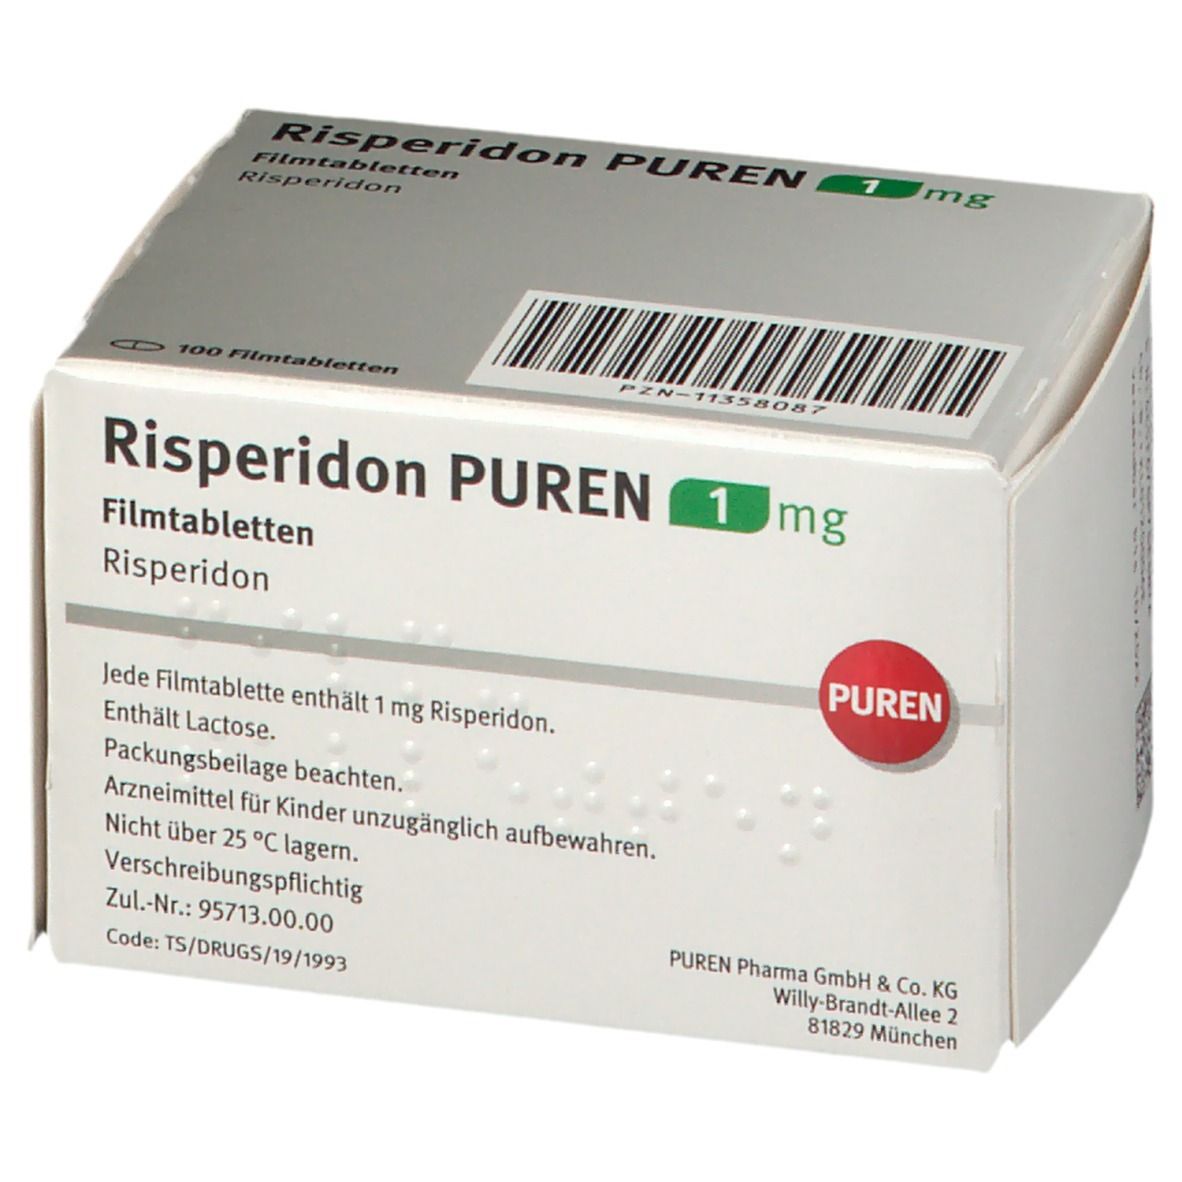 Risperidon PUREN 1 mg